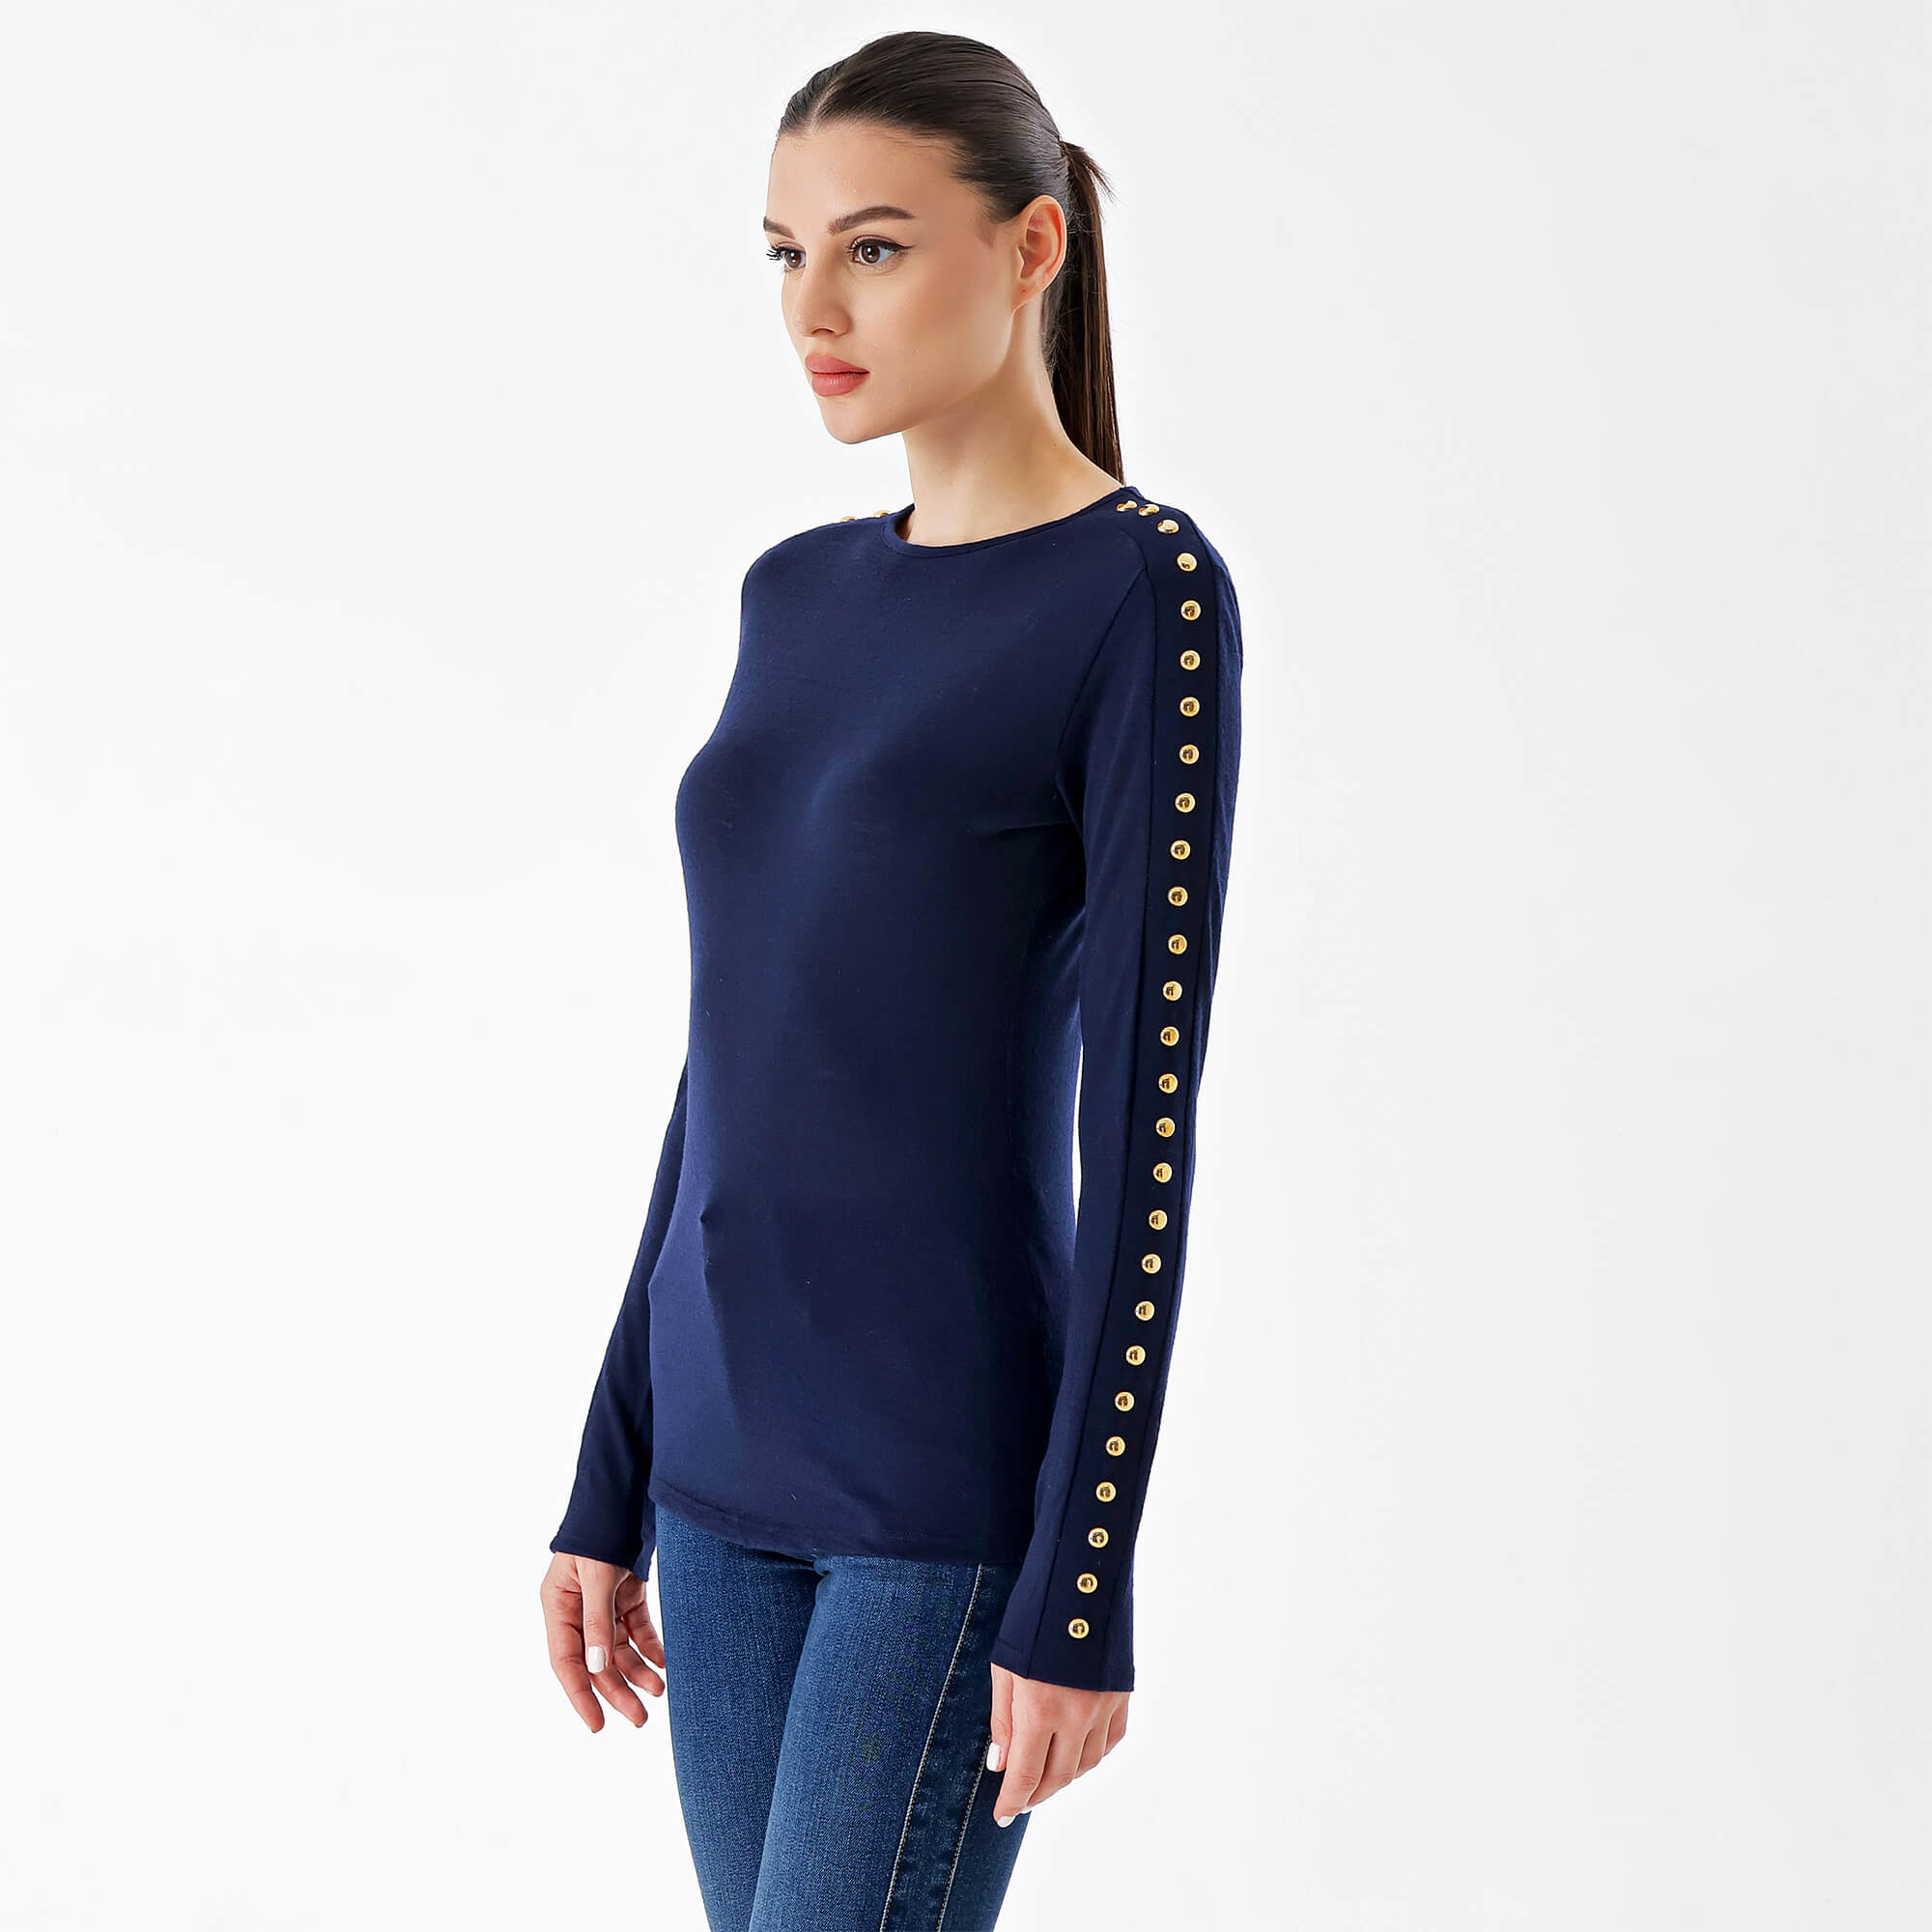 Balmain - Navy Blue Wool & Gold Stud Thin Sweater